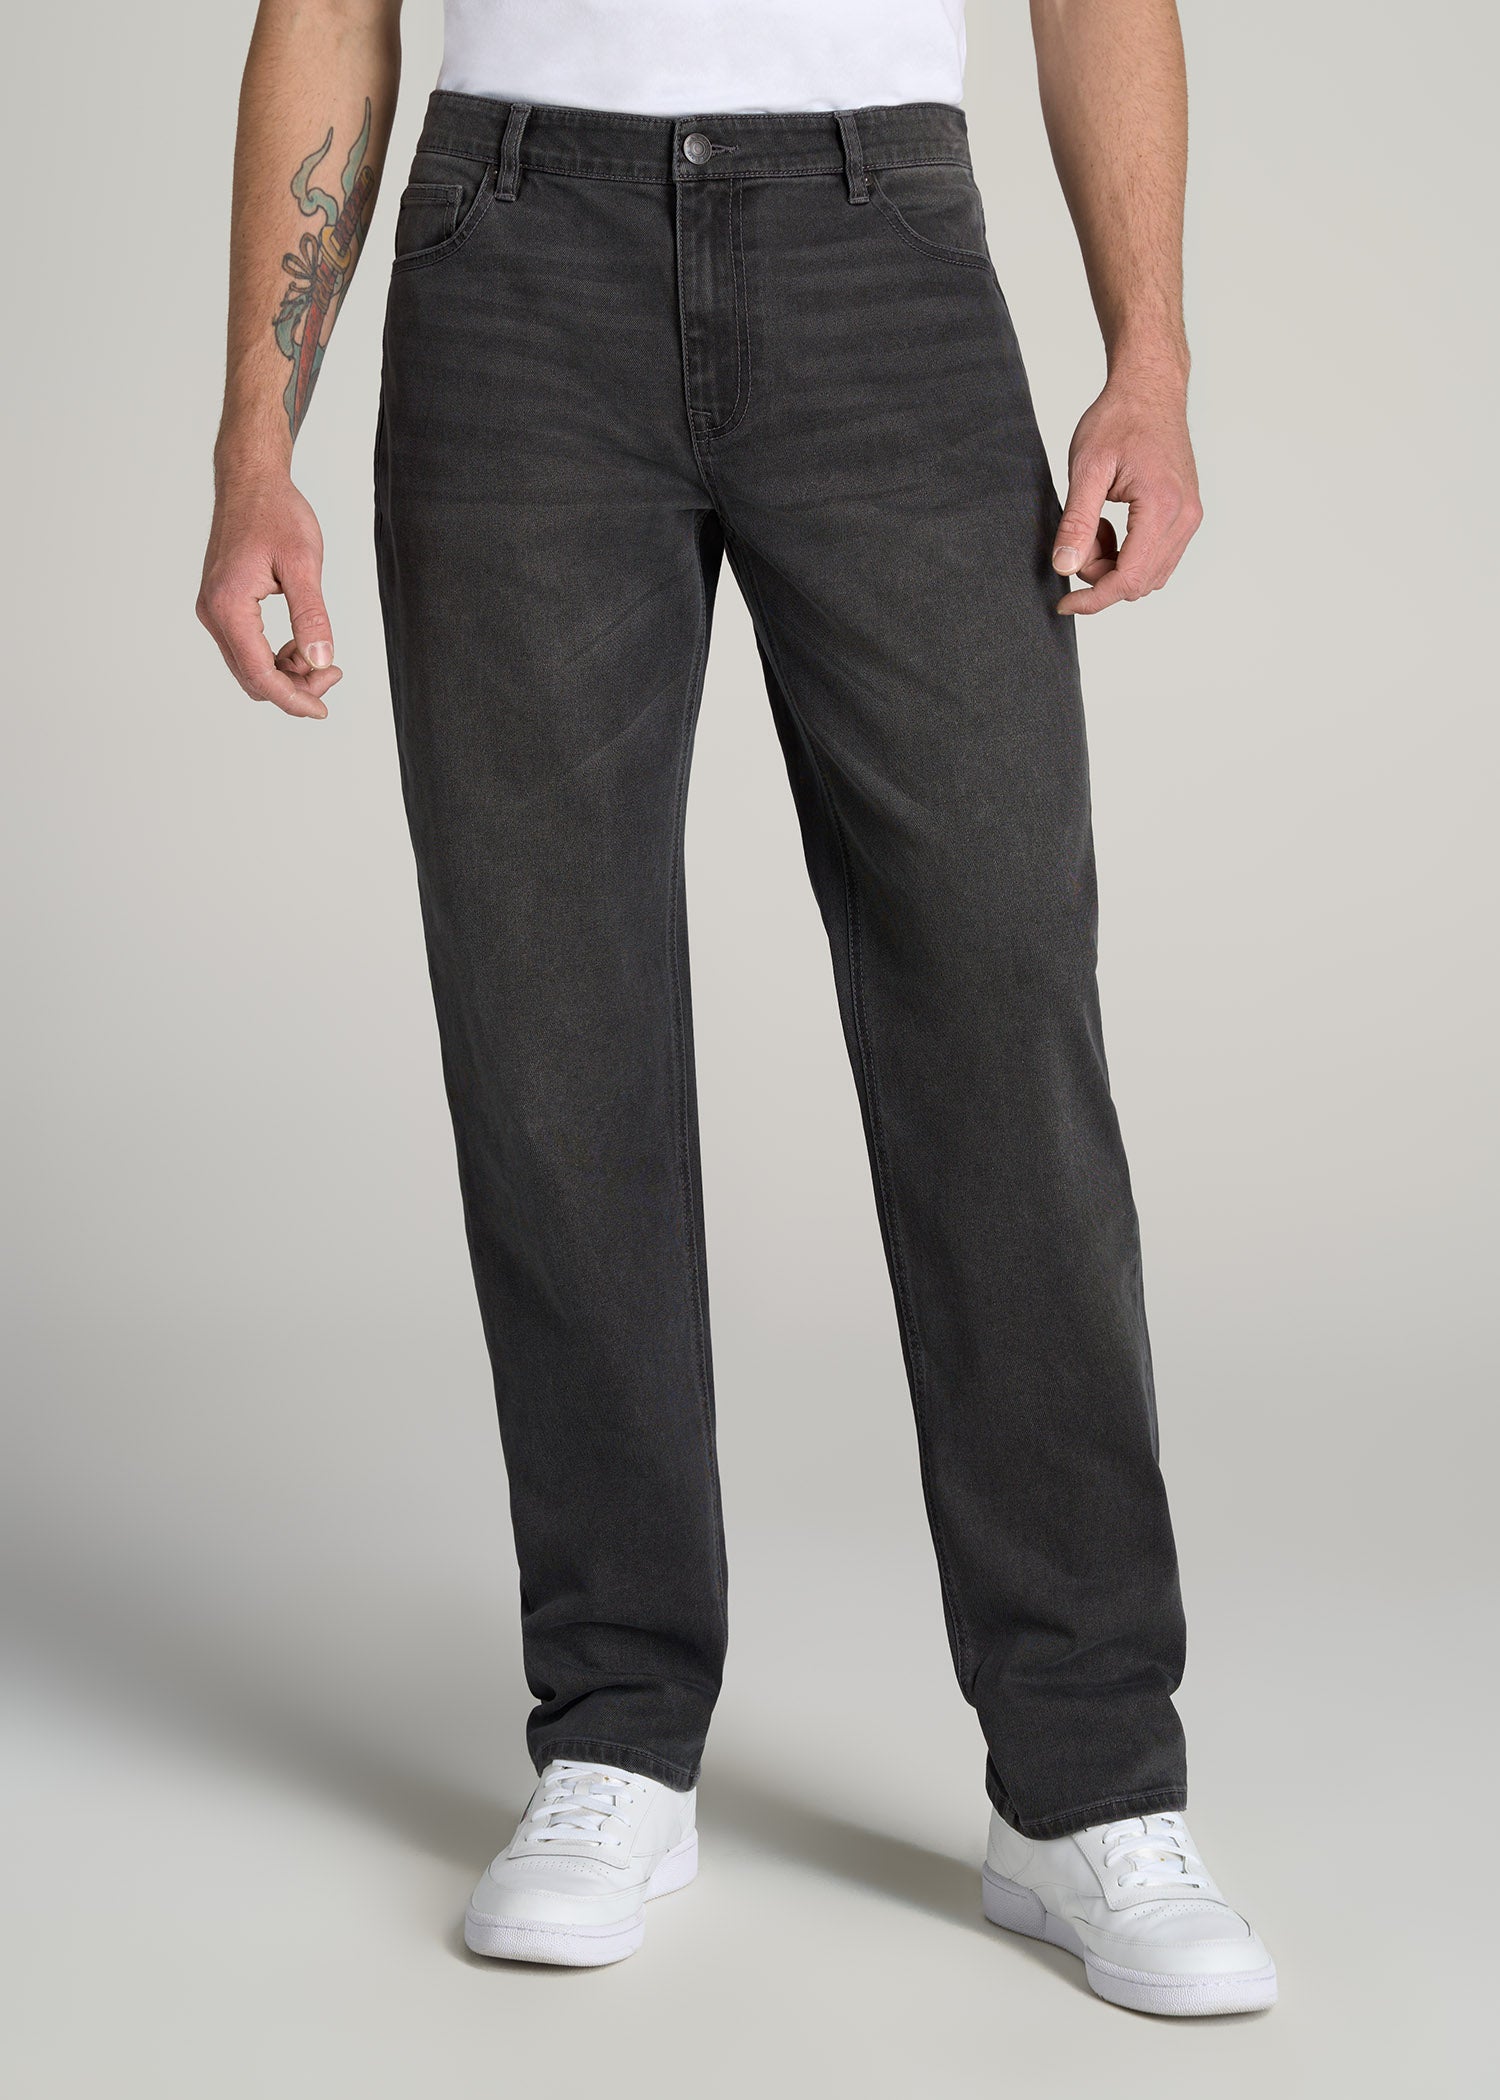 LJ&S Men's Tall Jeans Straight Leg Industrial Grey | American Tall